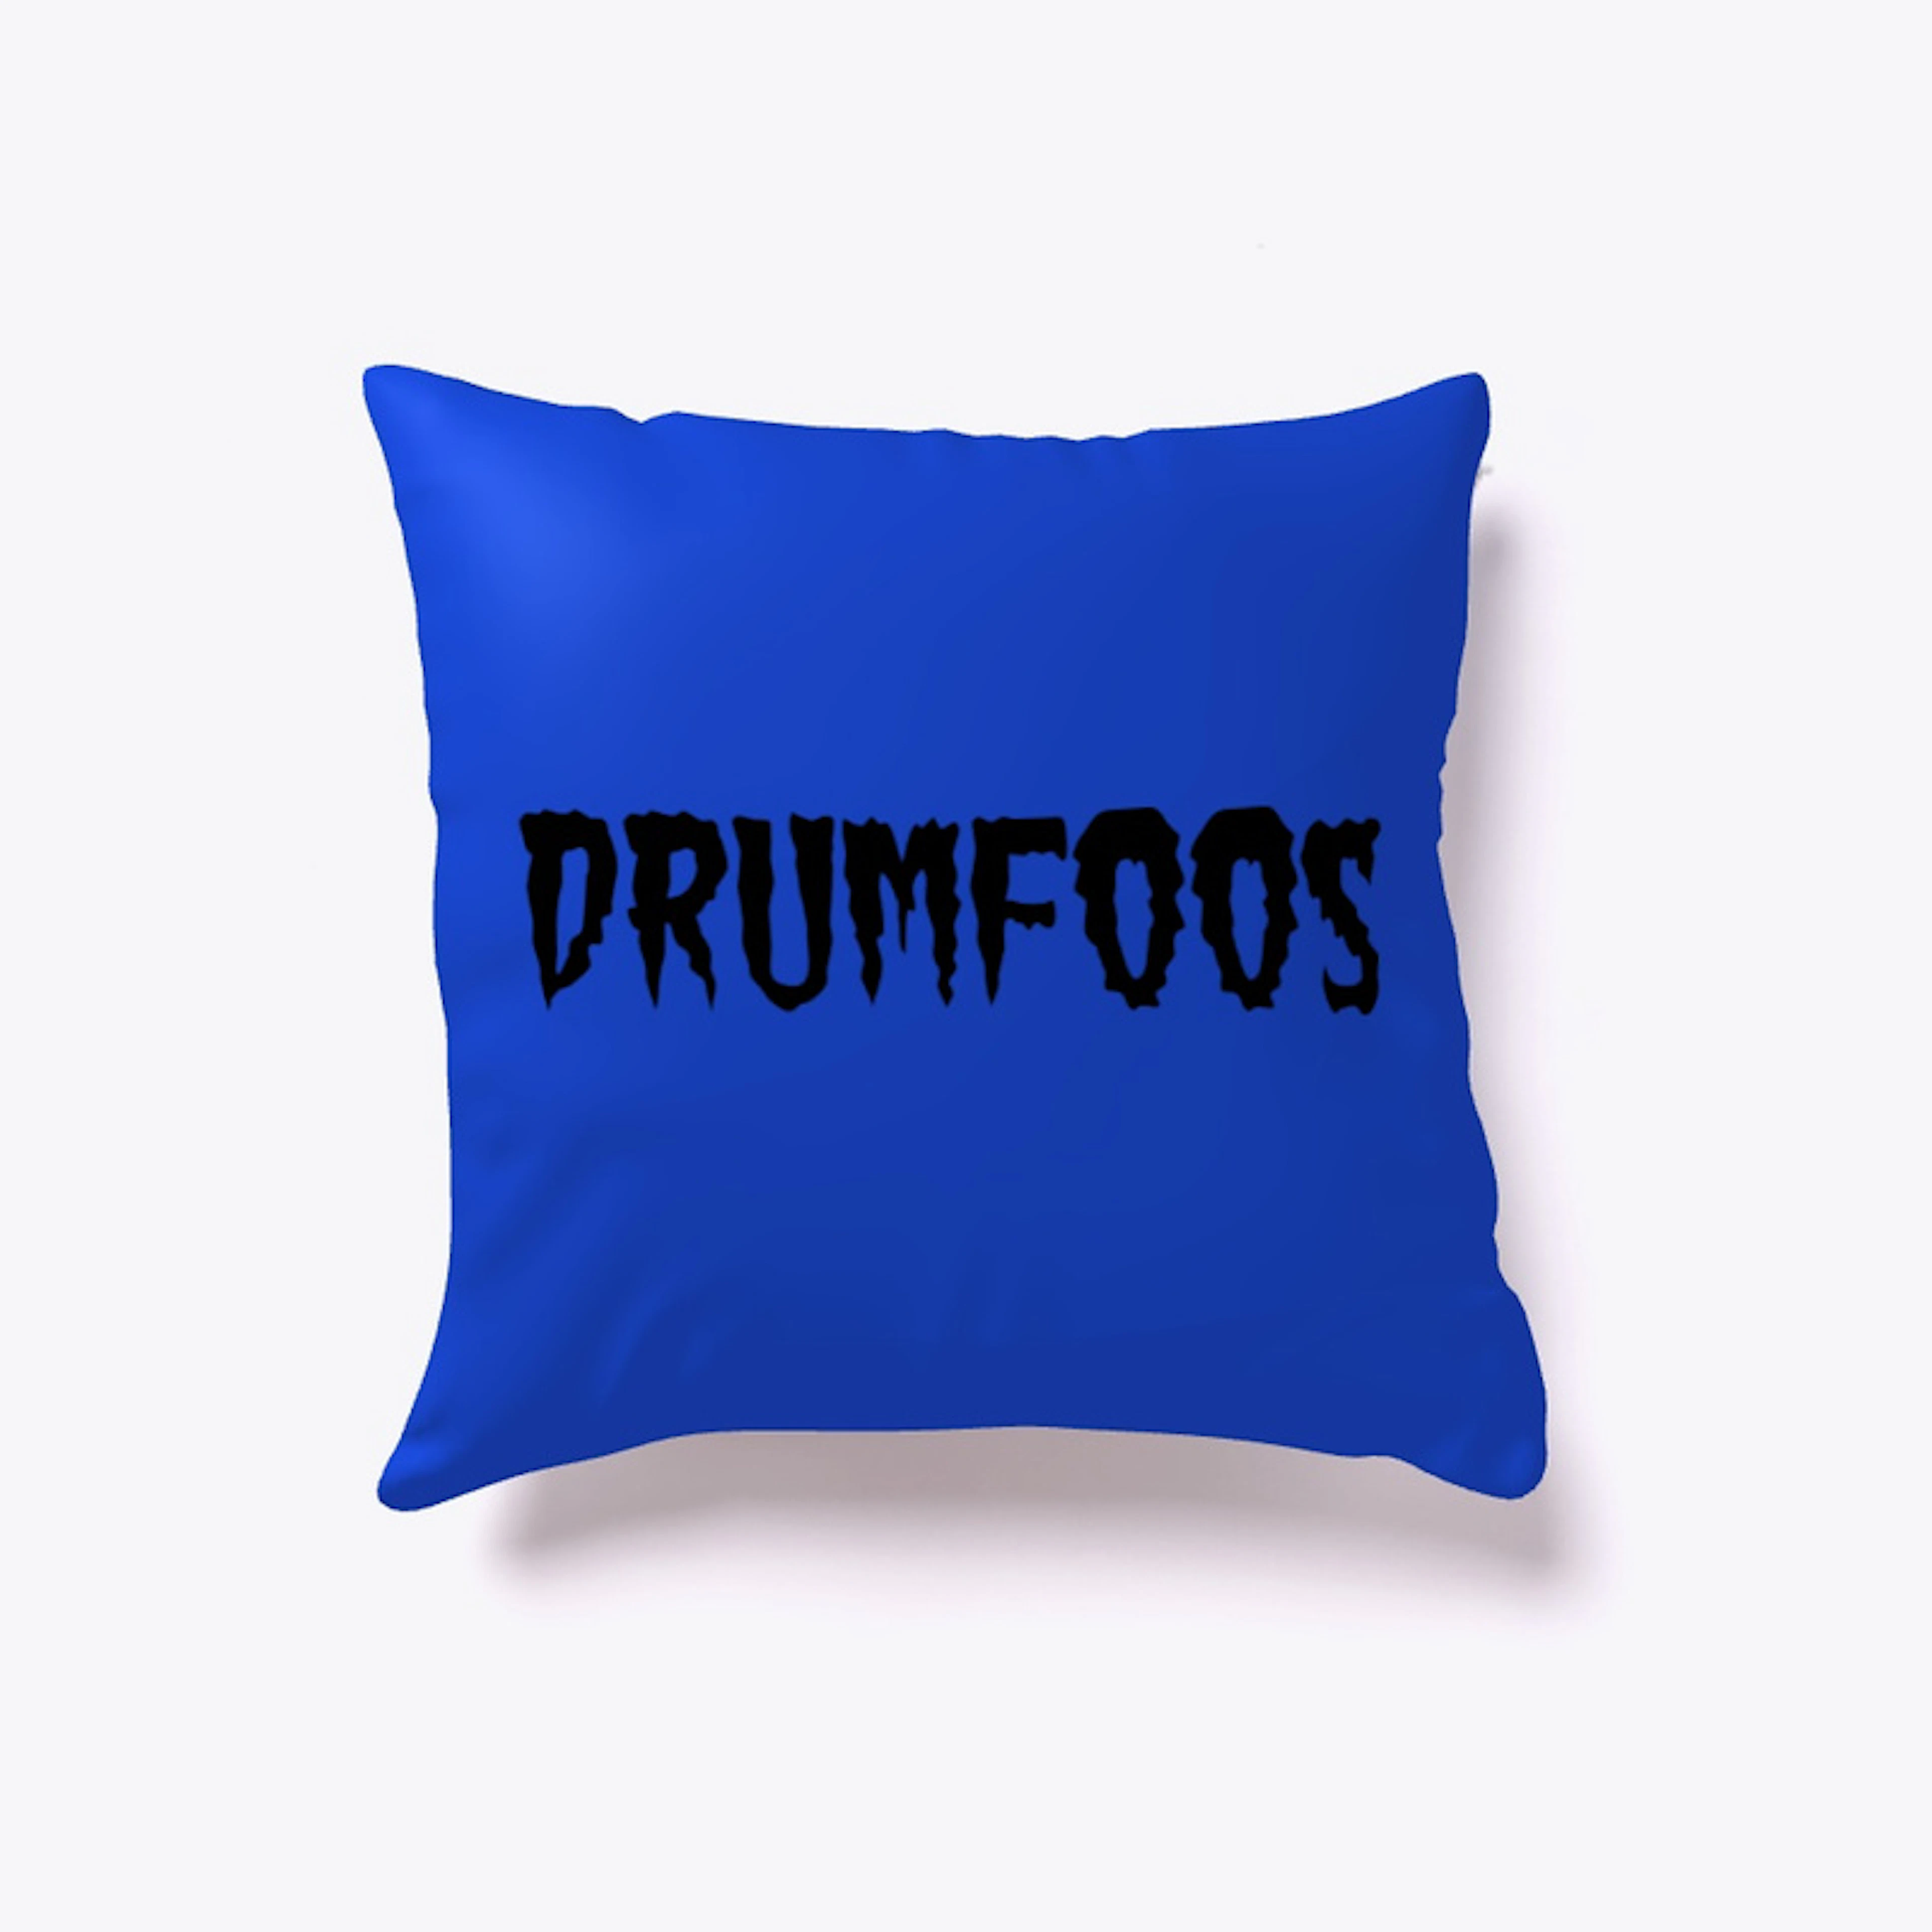 DRUMFOOS Pillow